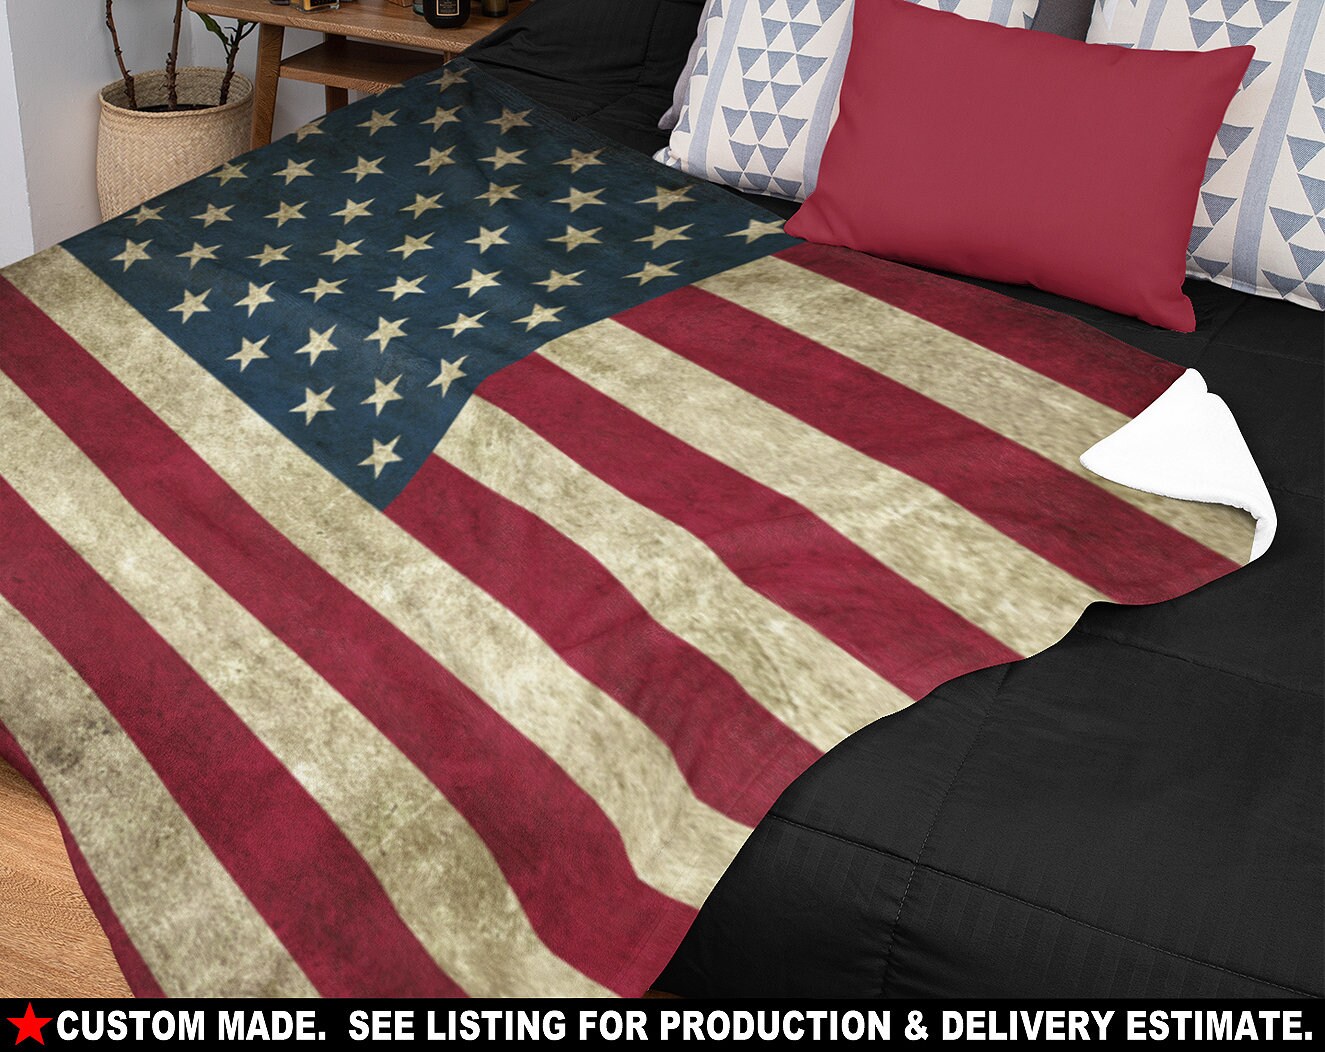 USA American Flag Patriotic Throw Soft Fleece Blanket 50x60 Bedding Decor Gift 